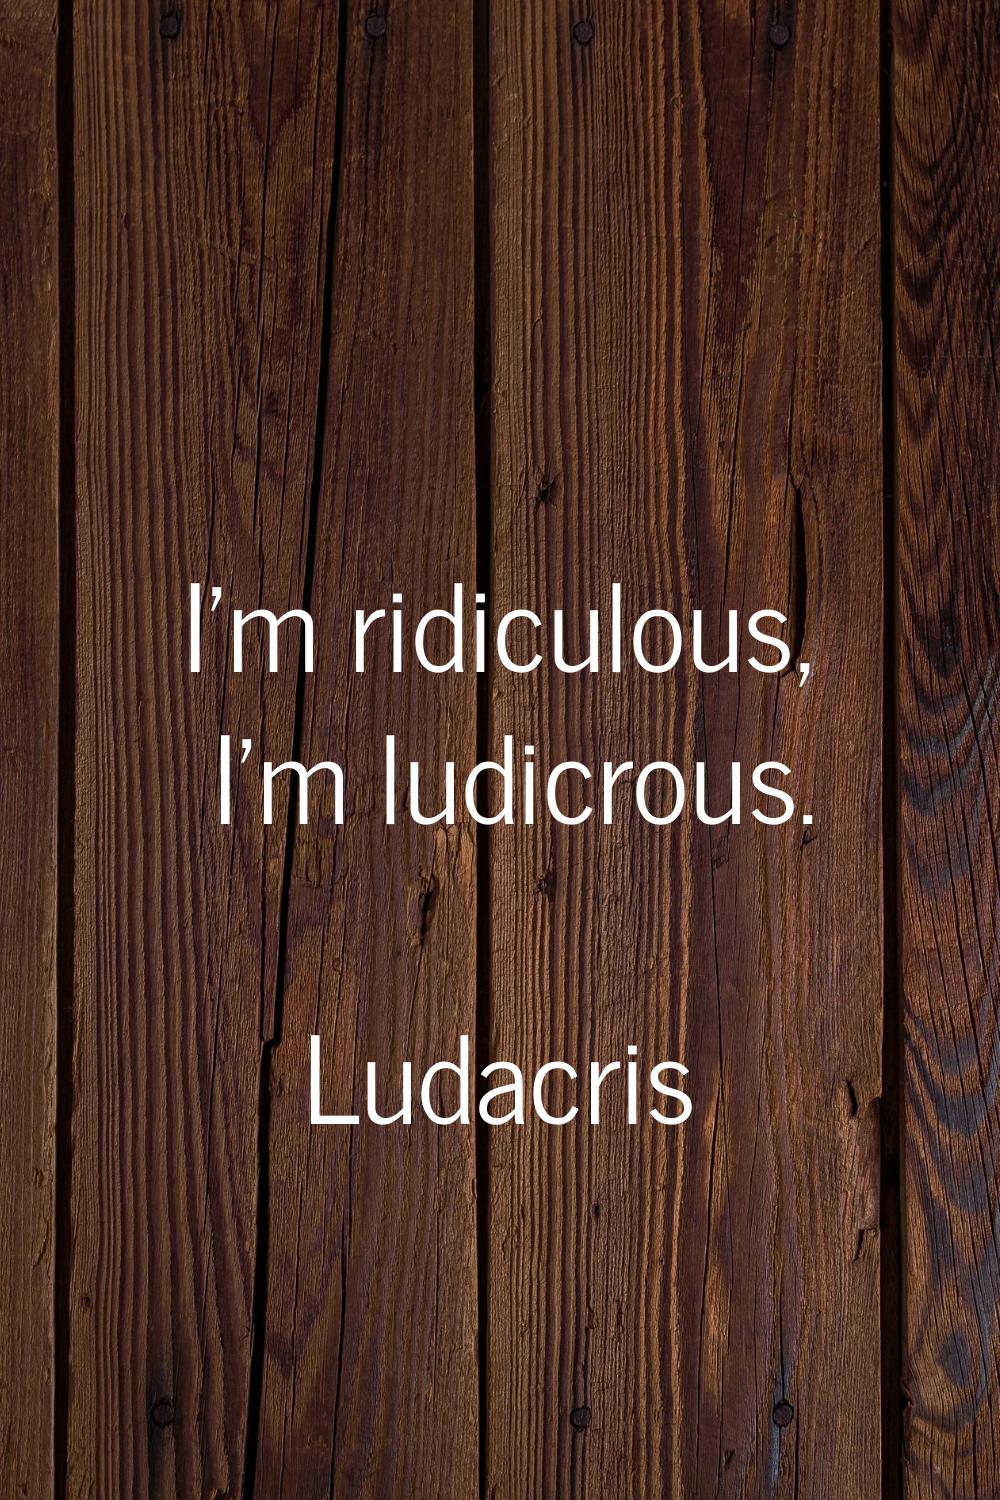 I'm ridiculous, I'm ludicrous.